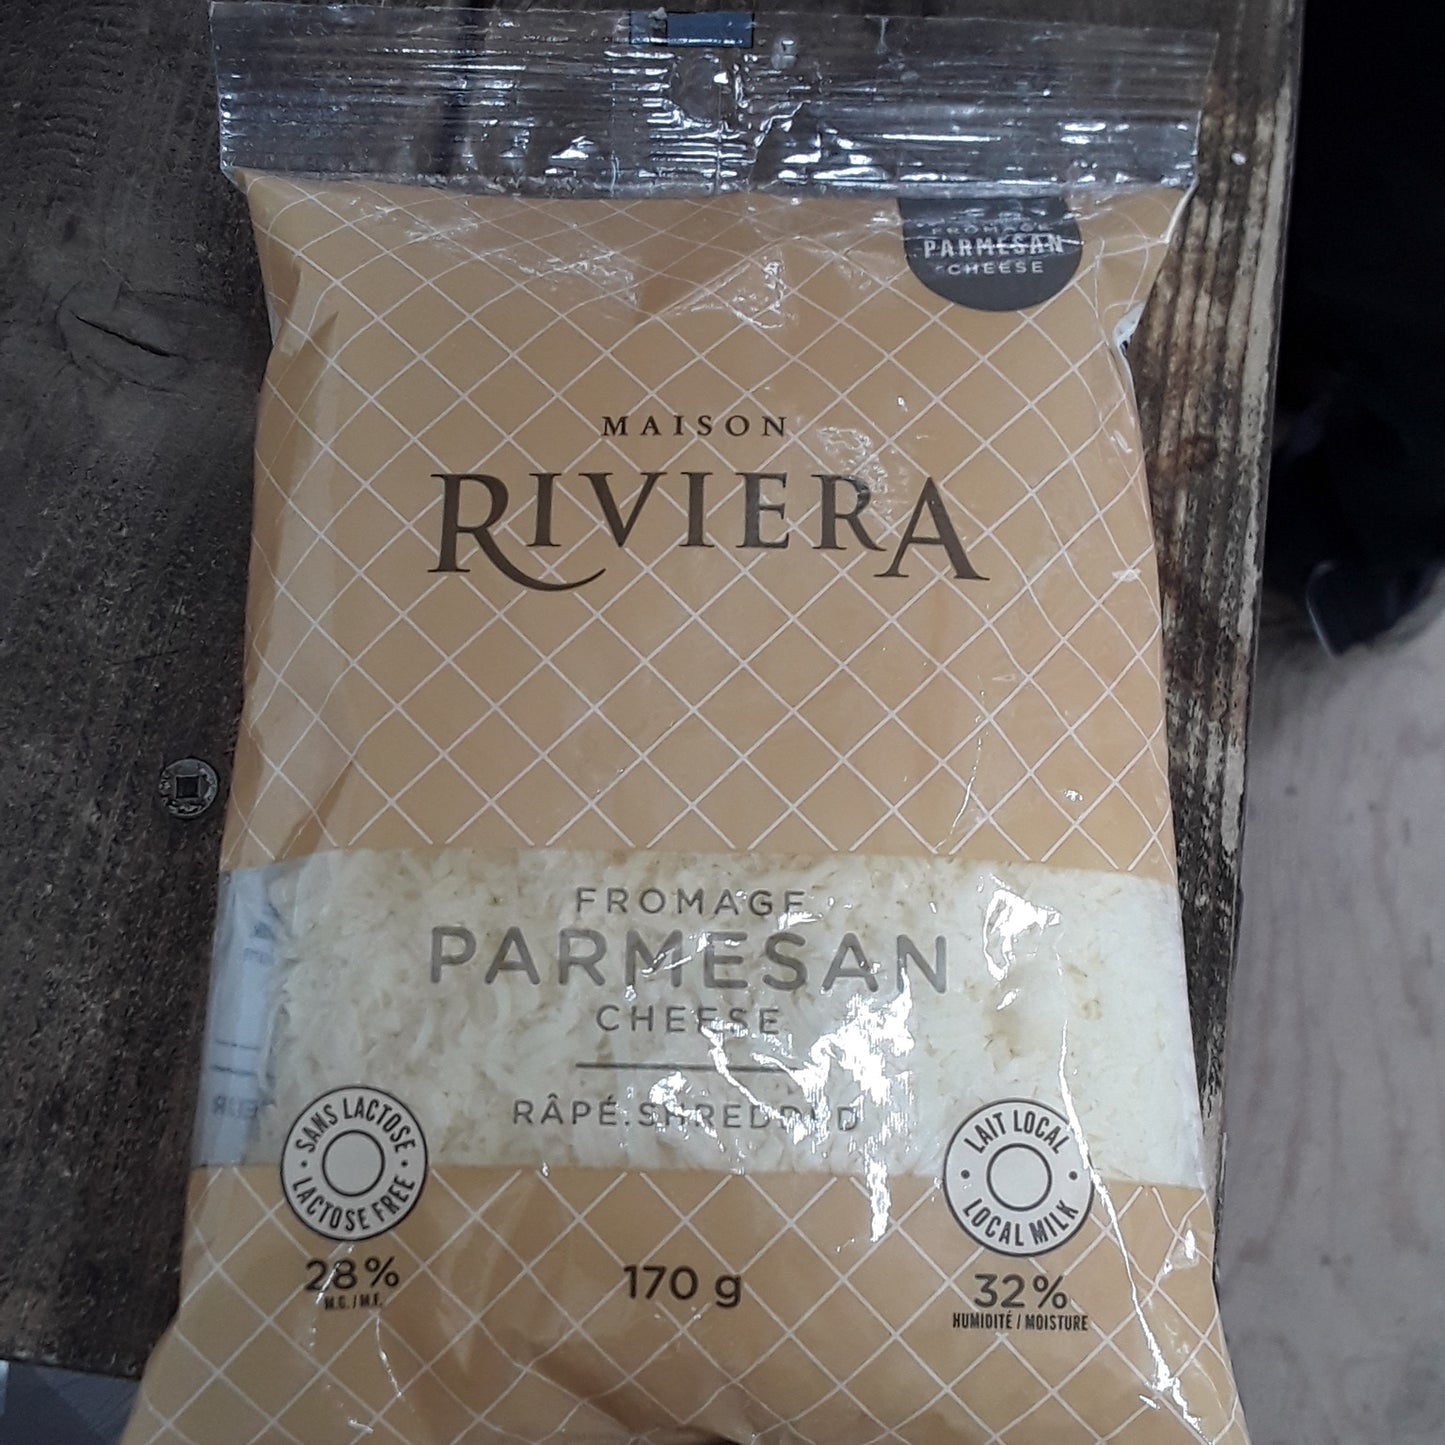 Shredded Parmesan Cheese - Riviera - 170g